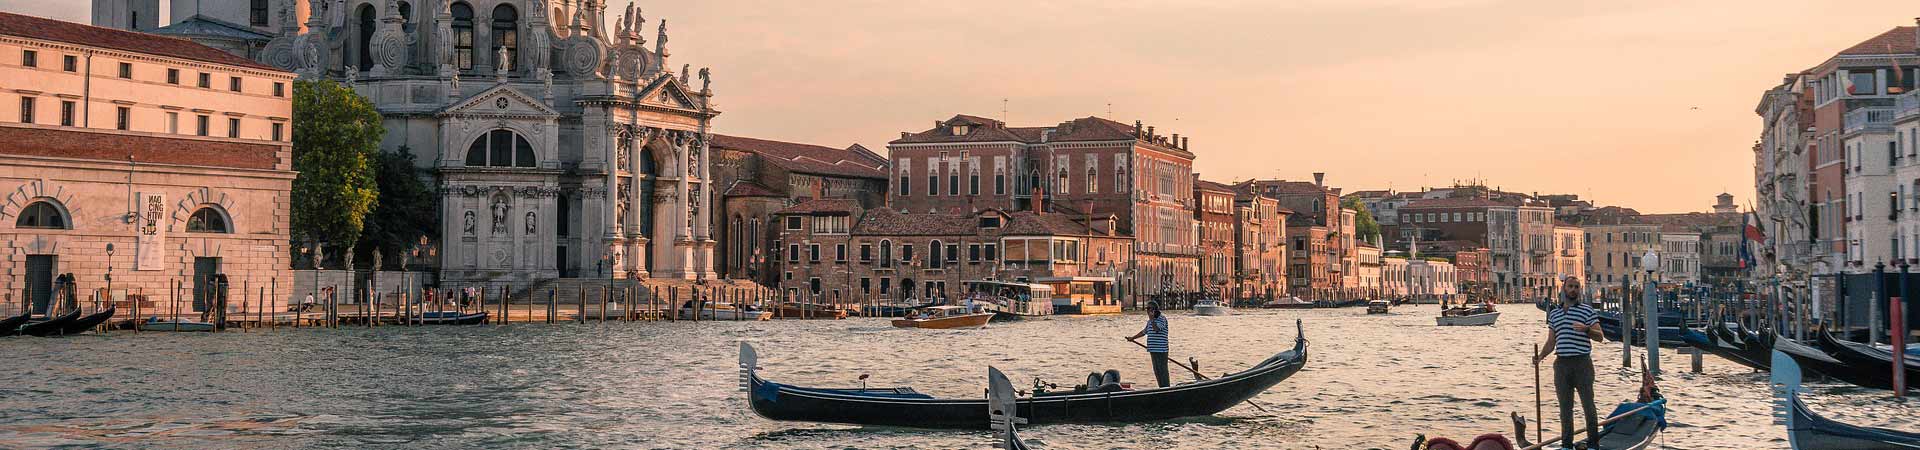 Gondolas along river in Venice Italy